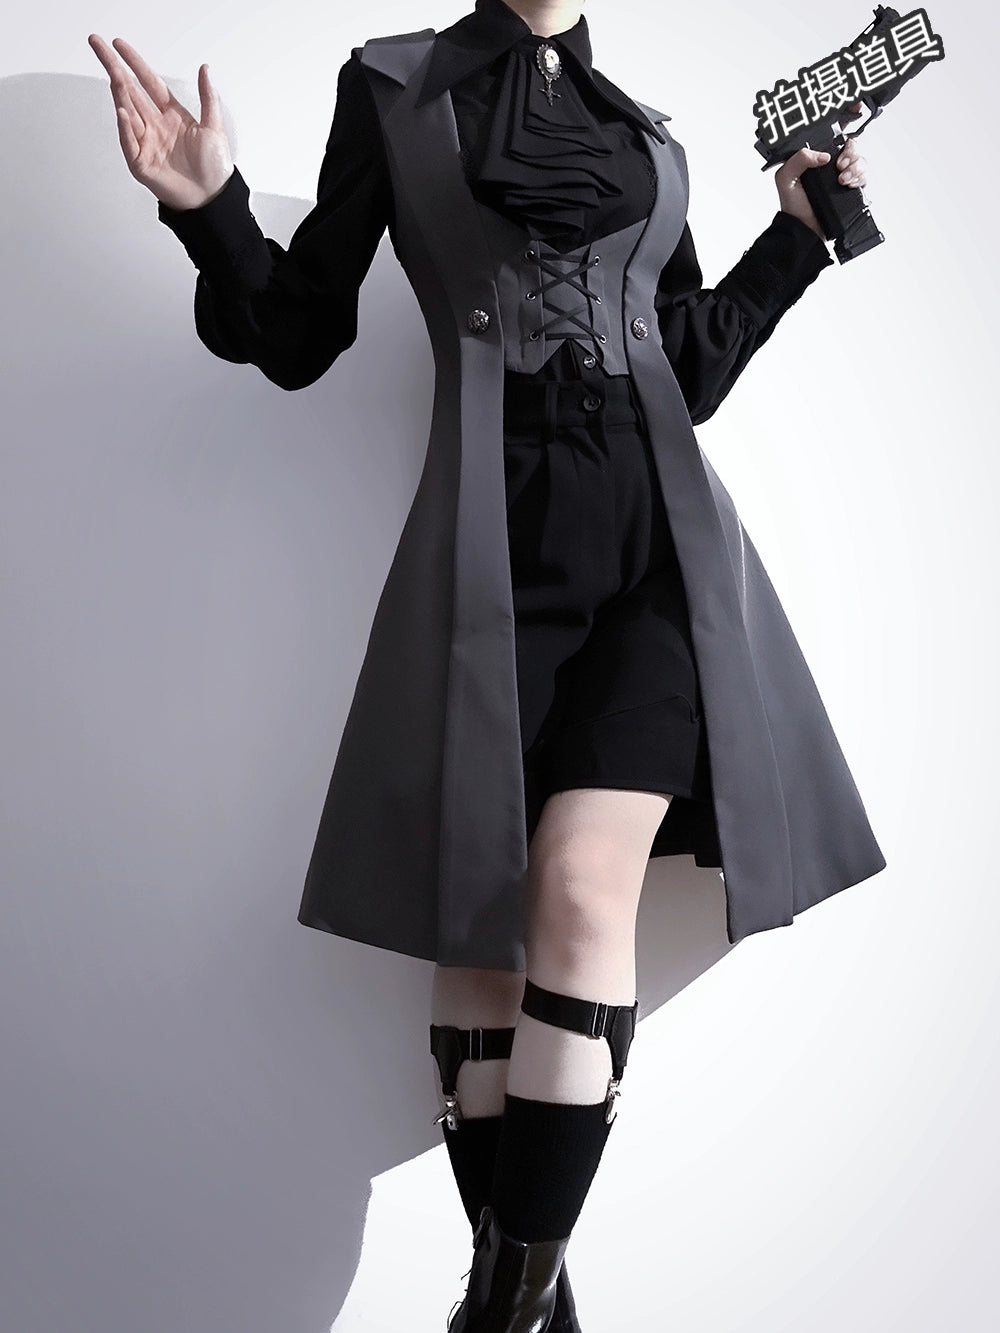 Princess Chronicles~The Night Prelude~Retro Lolita Vest Gothic Lolita Black Waistcoat   